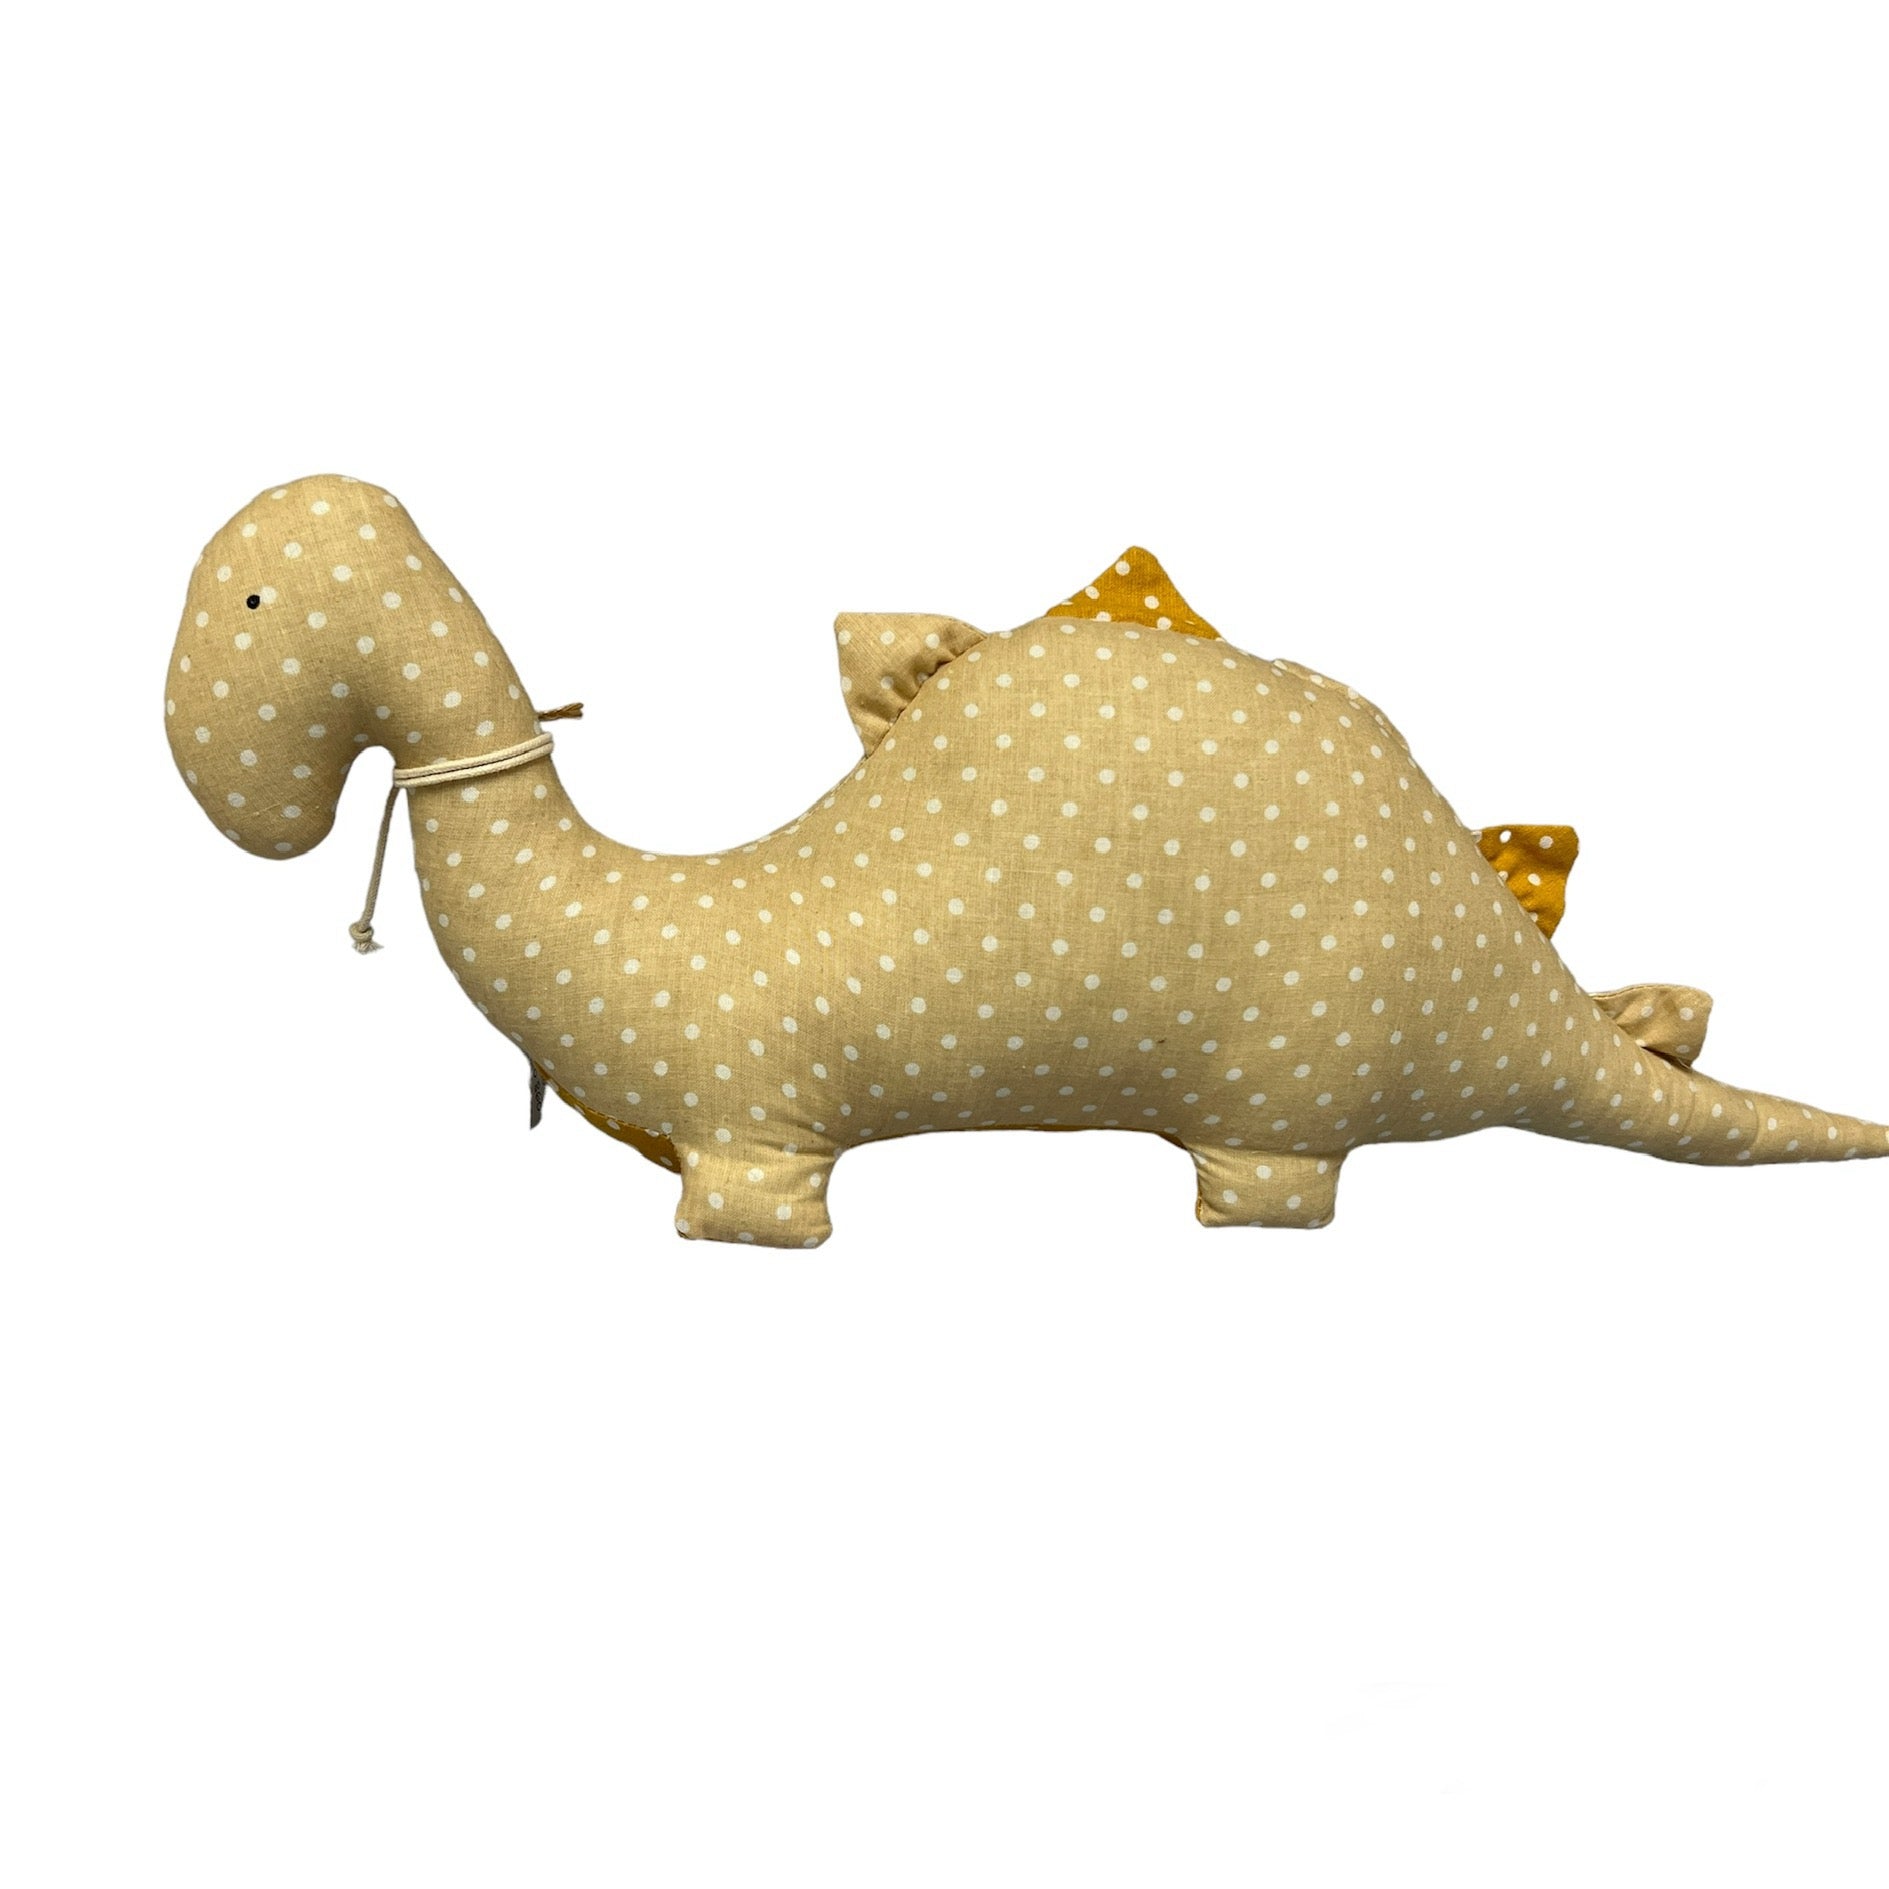 Handmade Stuffed Dinosaur